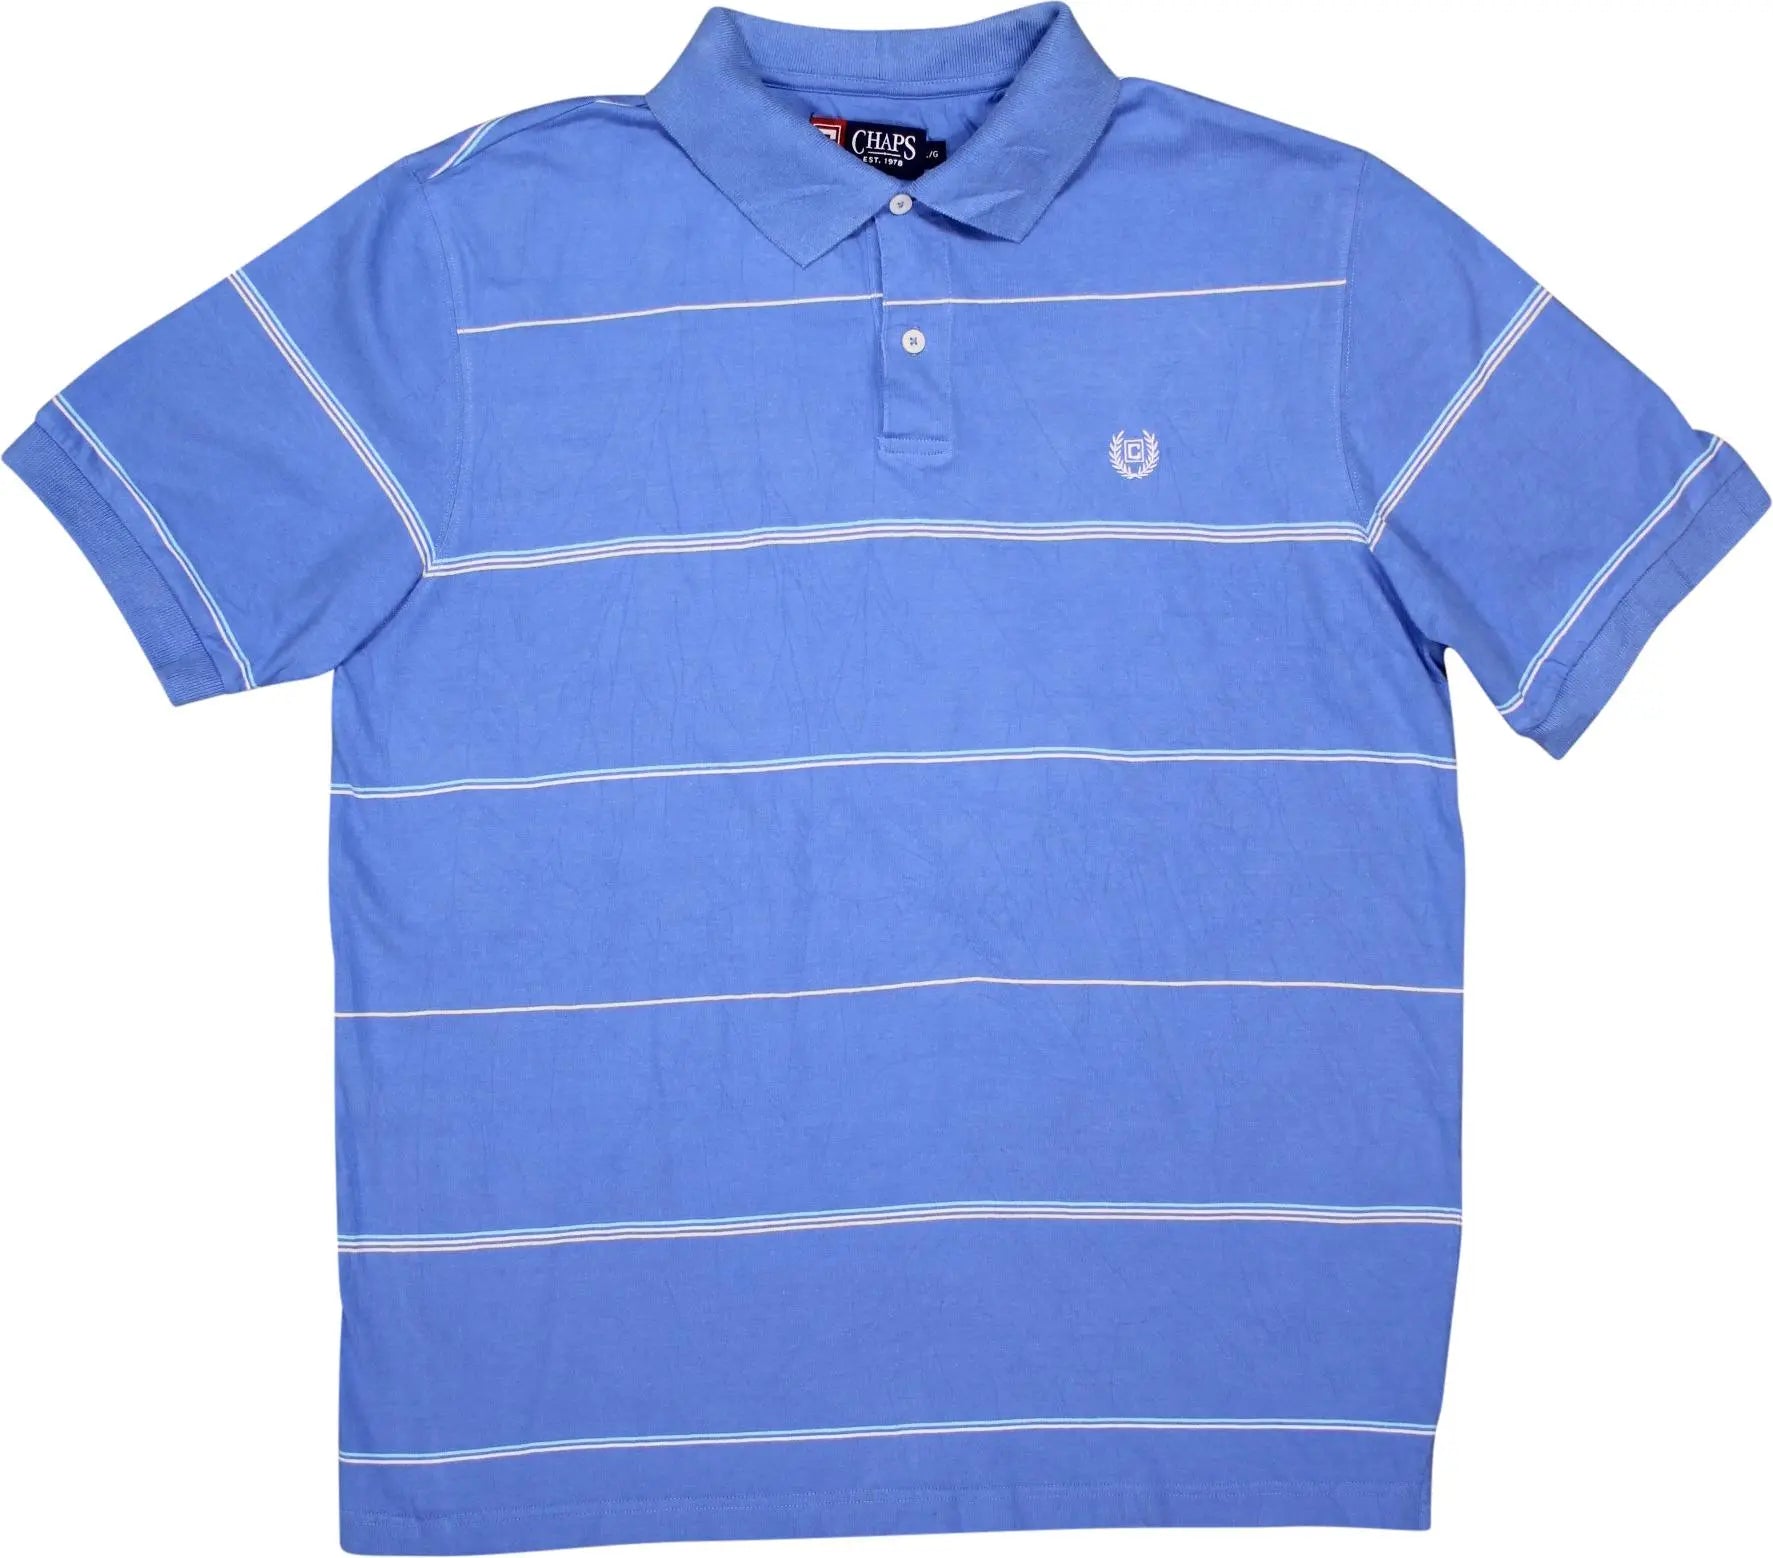 Chaps Ralph Lauren - Blue Polo Shirt by Chaps Ralph Lauren- ThriftTale.com - Vintage and second handclothing